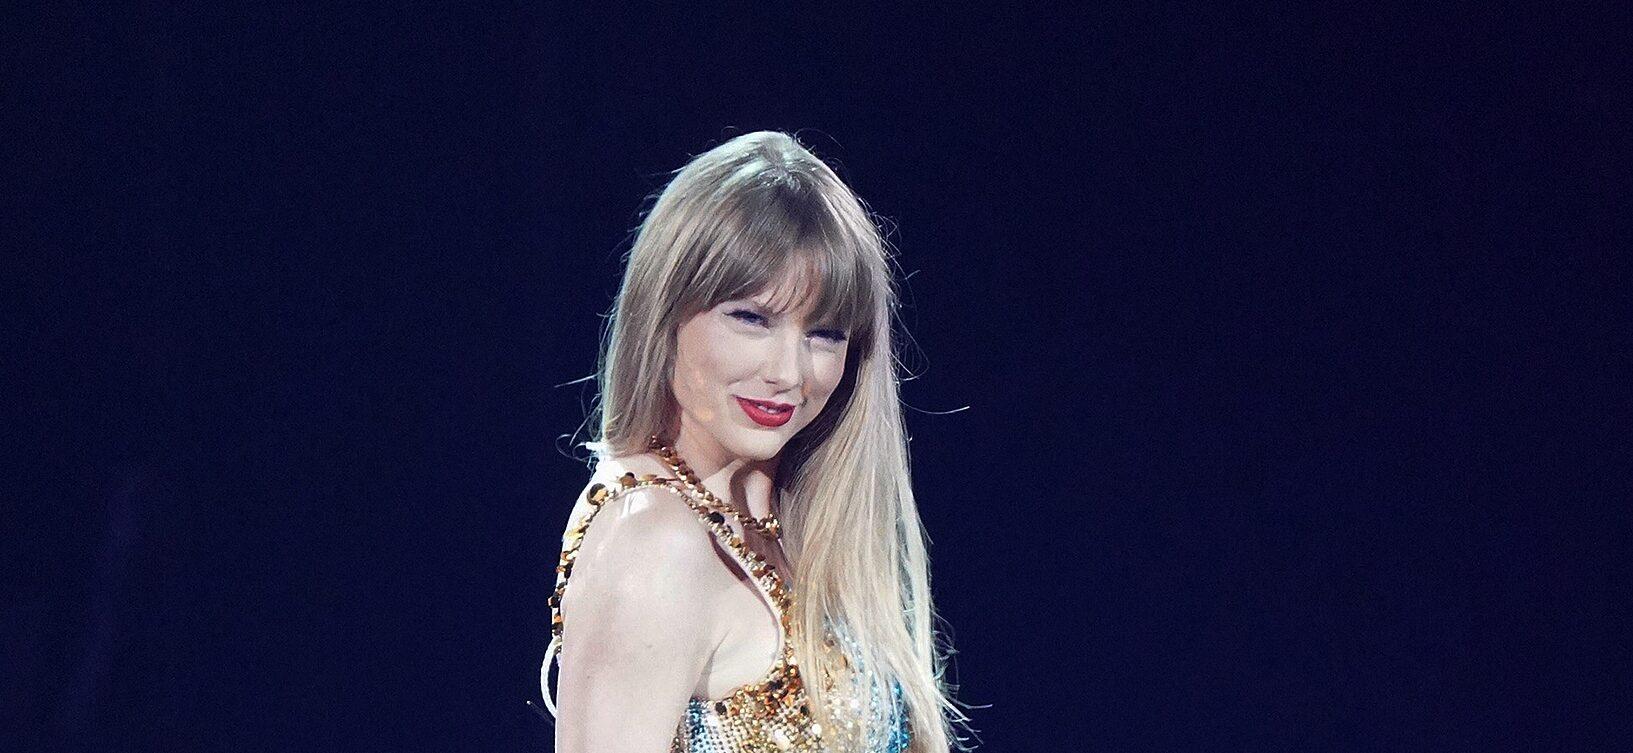 Taylor Swift performs in Arlington Texas